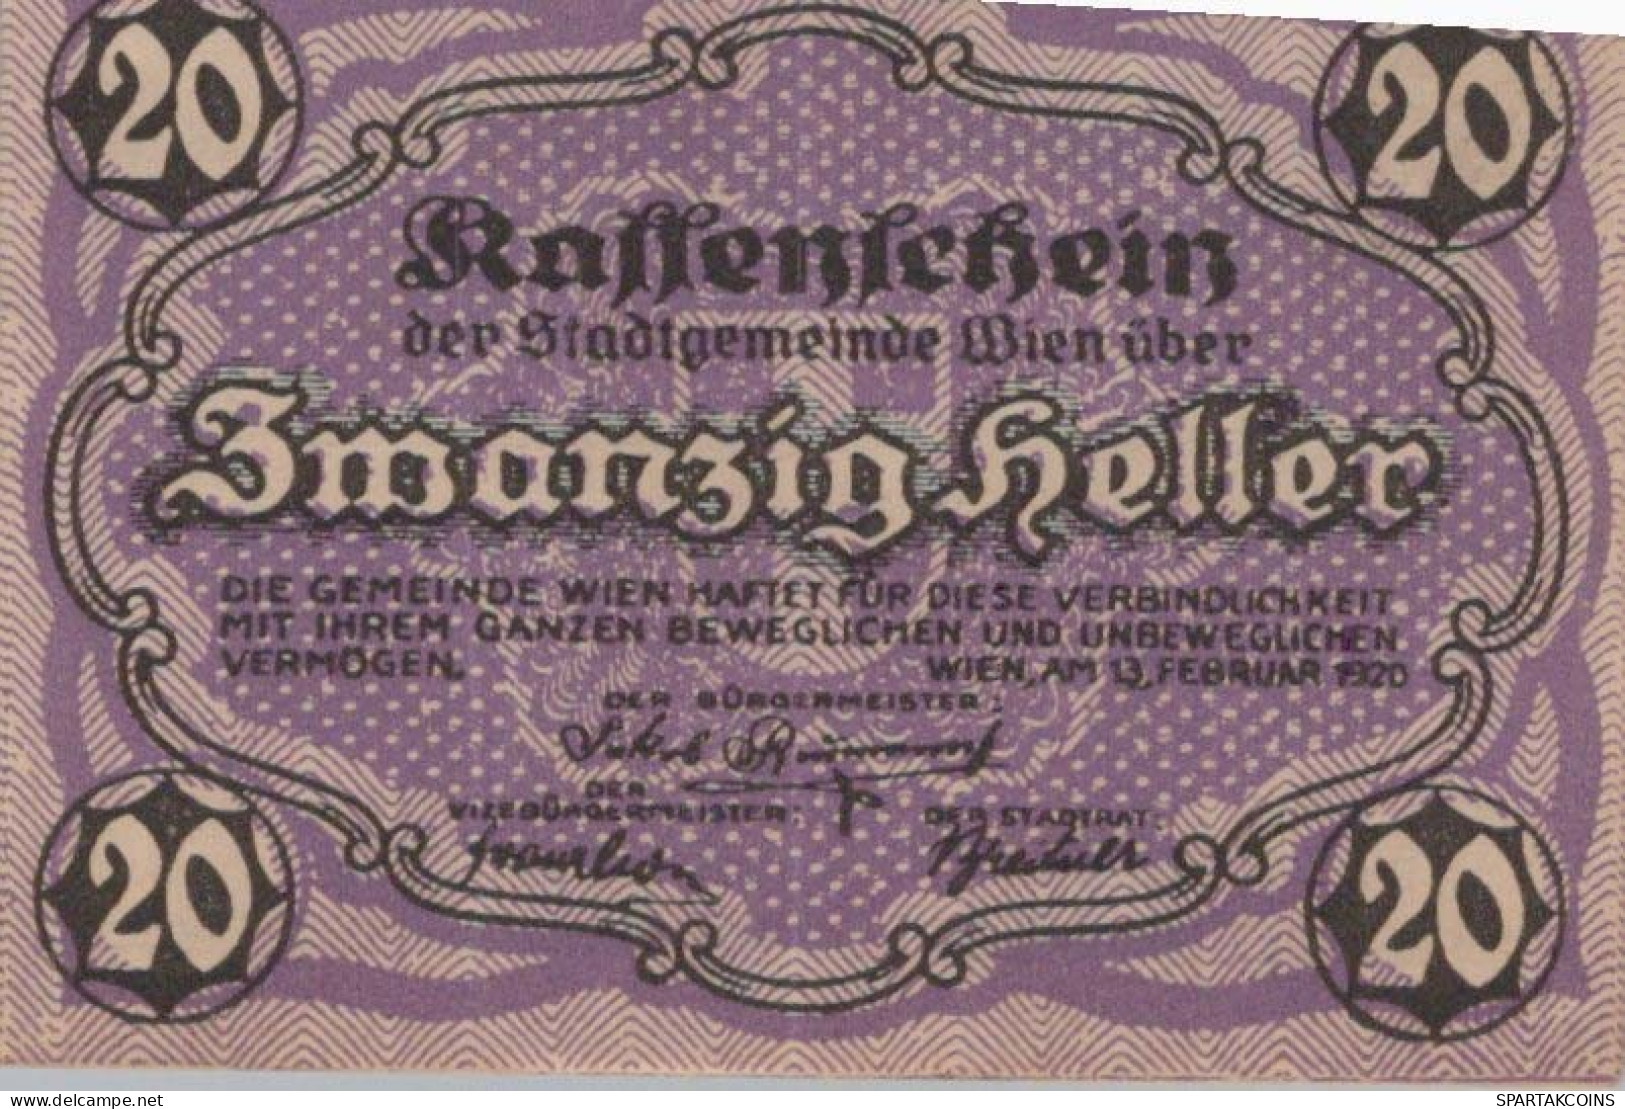 20 HELLER 1920 Stadt Wien Österreich Notgeld Banknote #PE019 - [11] Local Banknote Issues